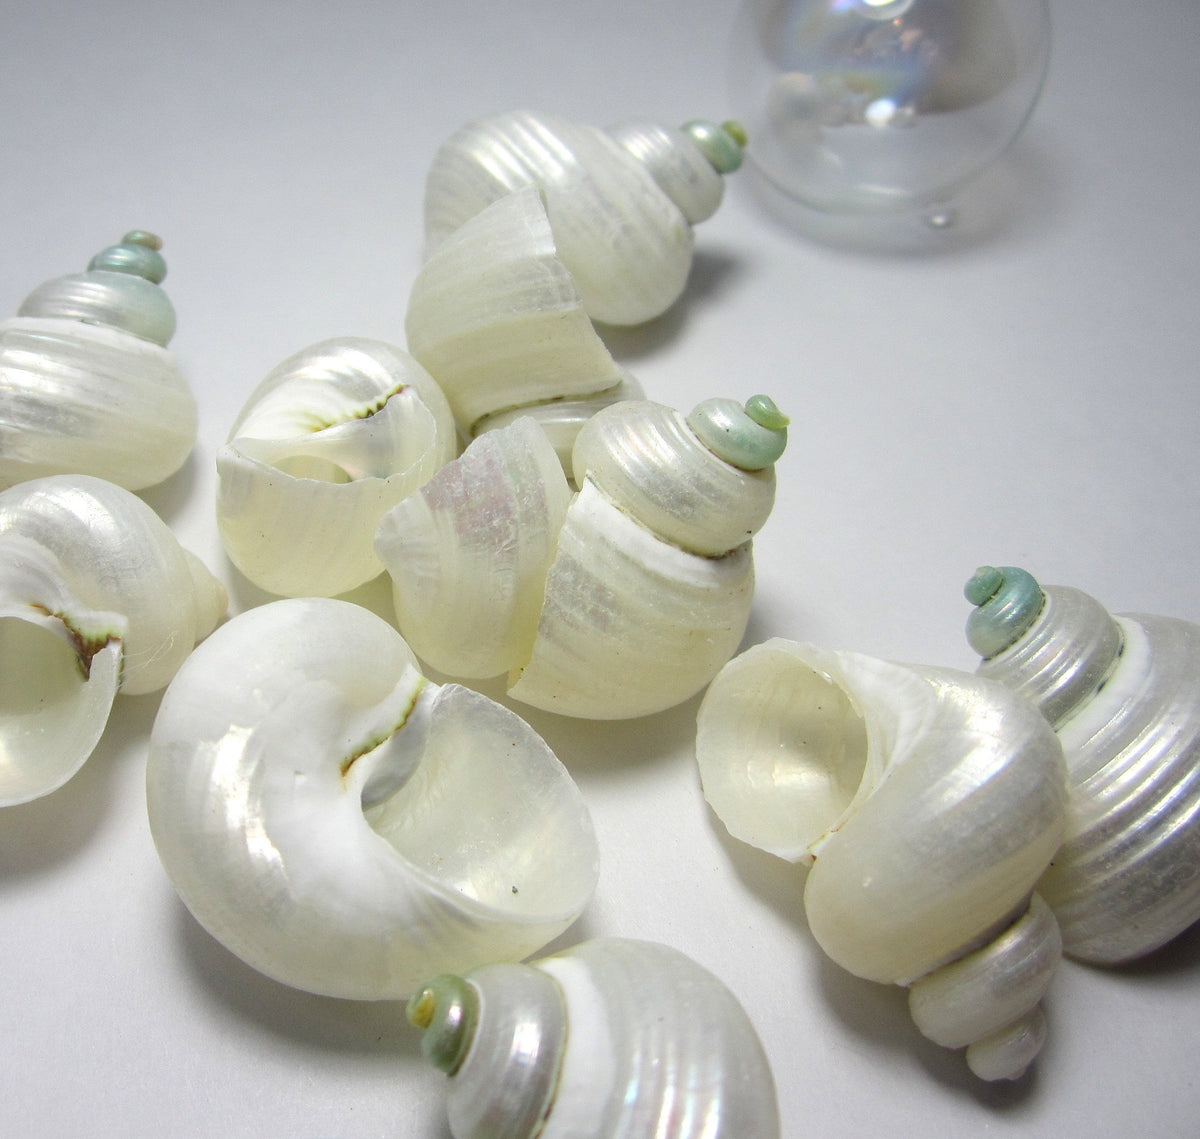 Pearl White Abalone Shells-donkey Ear Abalone Shells-23pearled  Shells-polished Shells-white Shells-wedding Decor-beach Decor-sea Shells 